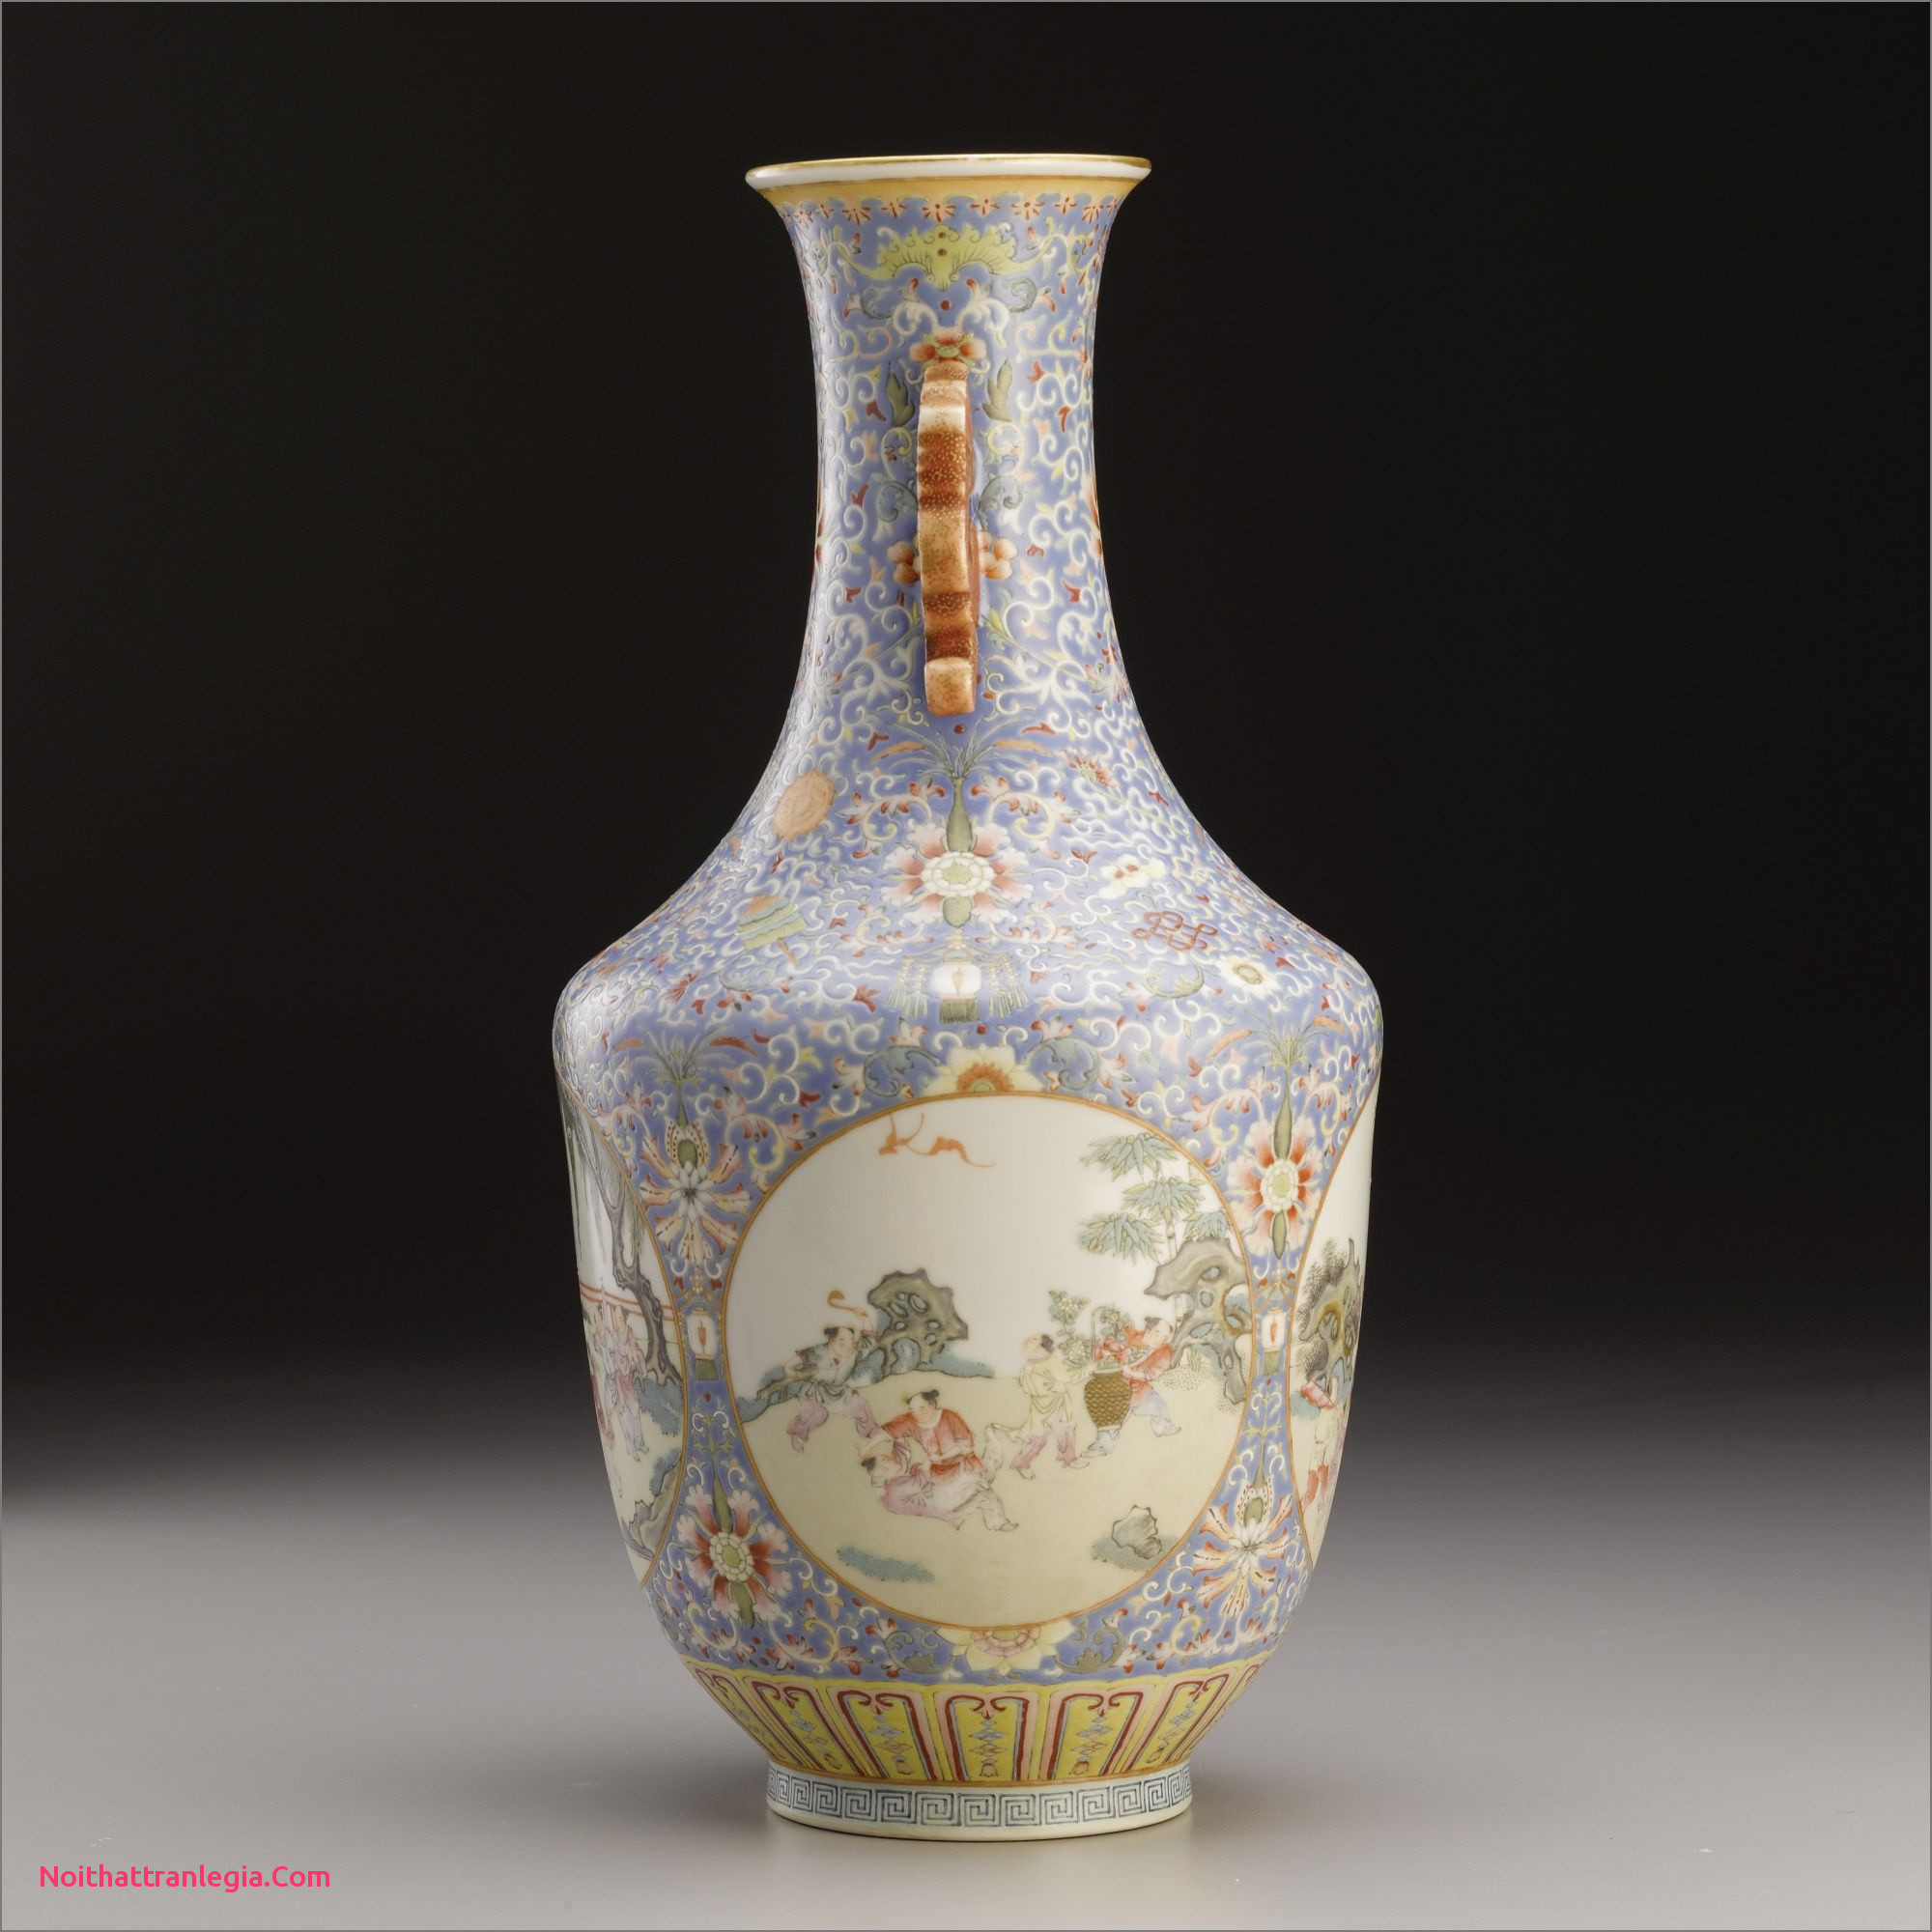 chinese ceramic vases antique of 20 chinese antique vase noithattranlegia vases design in a fine blue ground famille rose vase qing dynasty daoguang